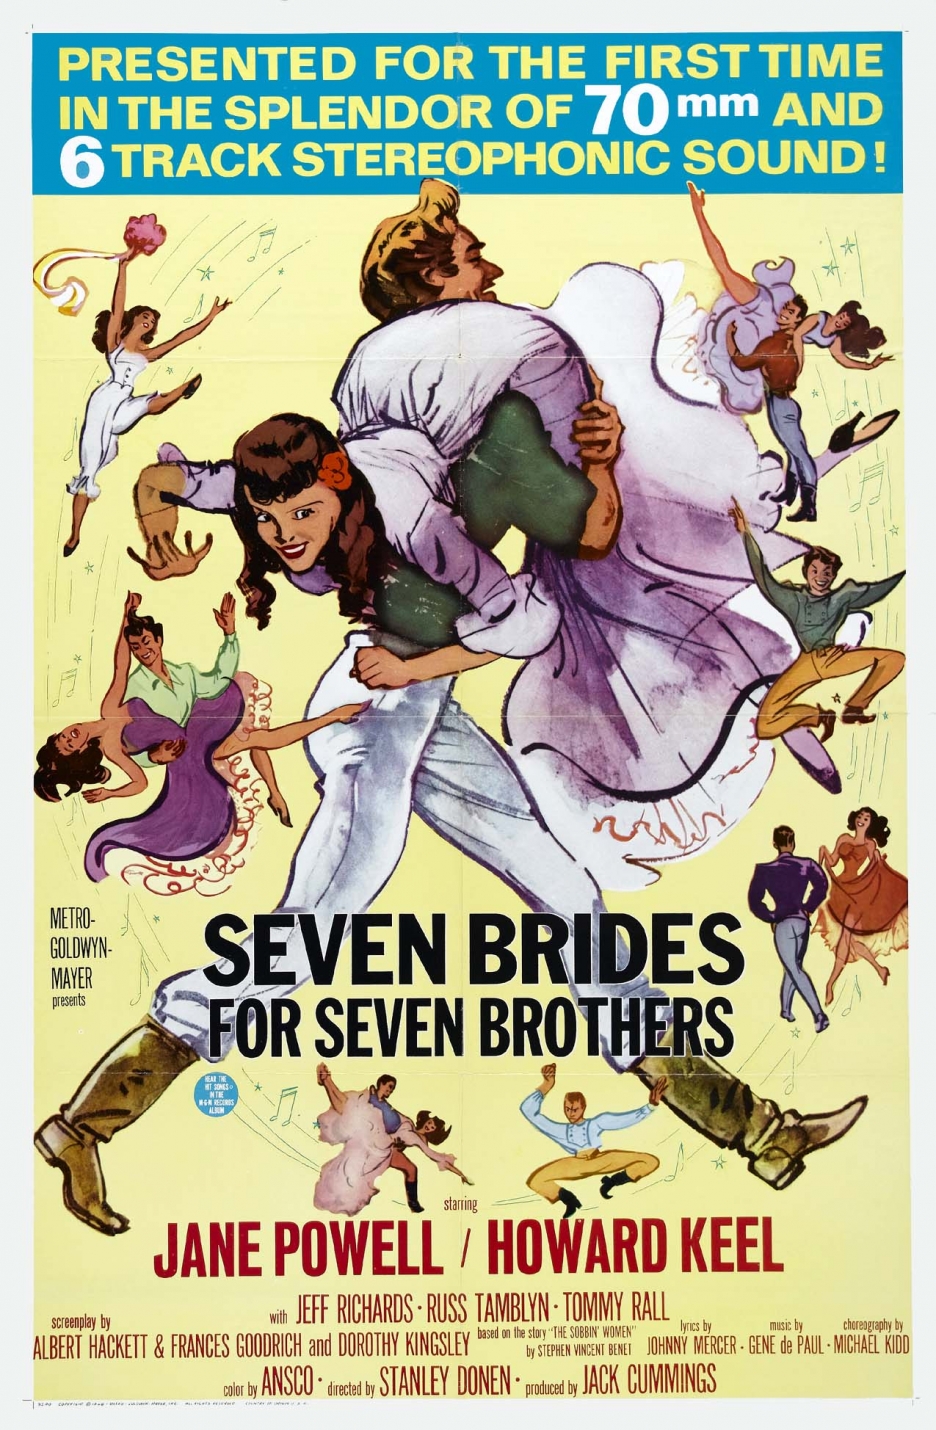 Nonton film Seven Brides For Seven Brothers layarkaca21 indoxx1 ganool online streaming terbaru